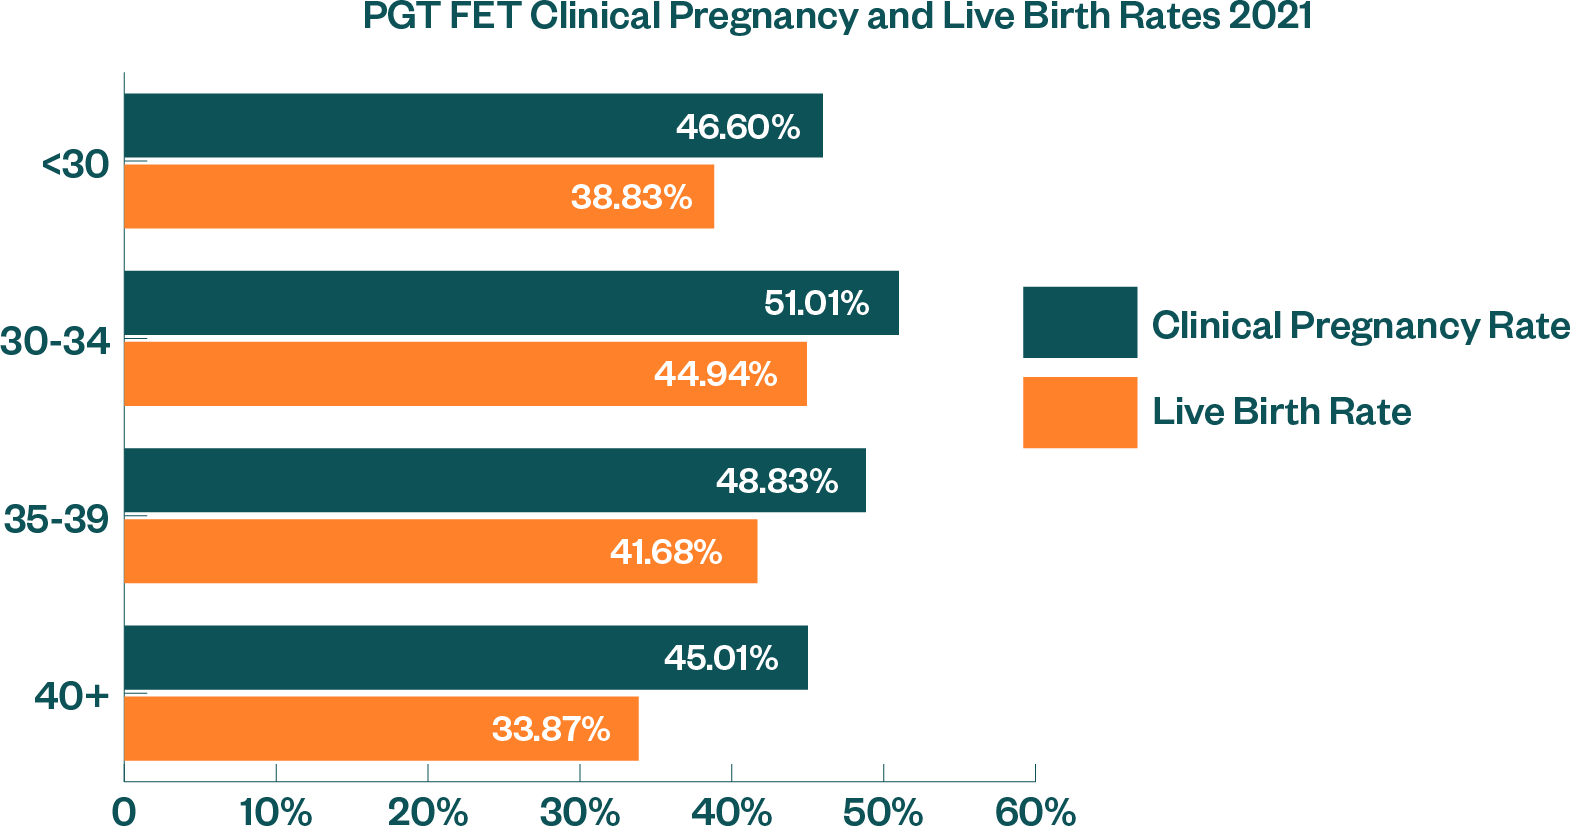 MI2417 Success Rates2021 V1 Clinical Pregnancy And Live Birth Rates PGTFET 01